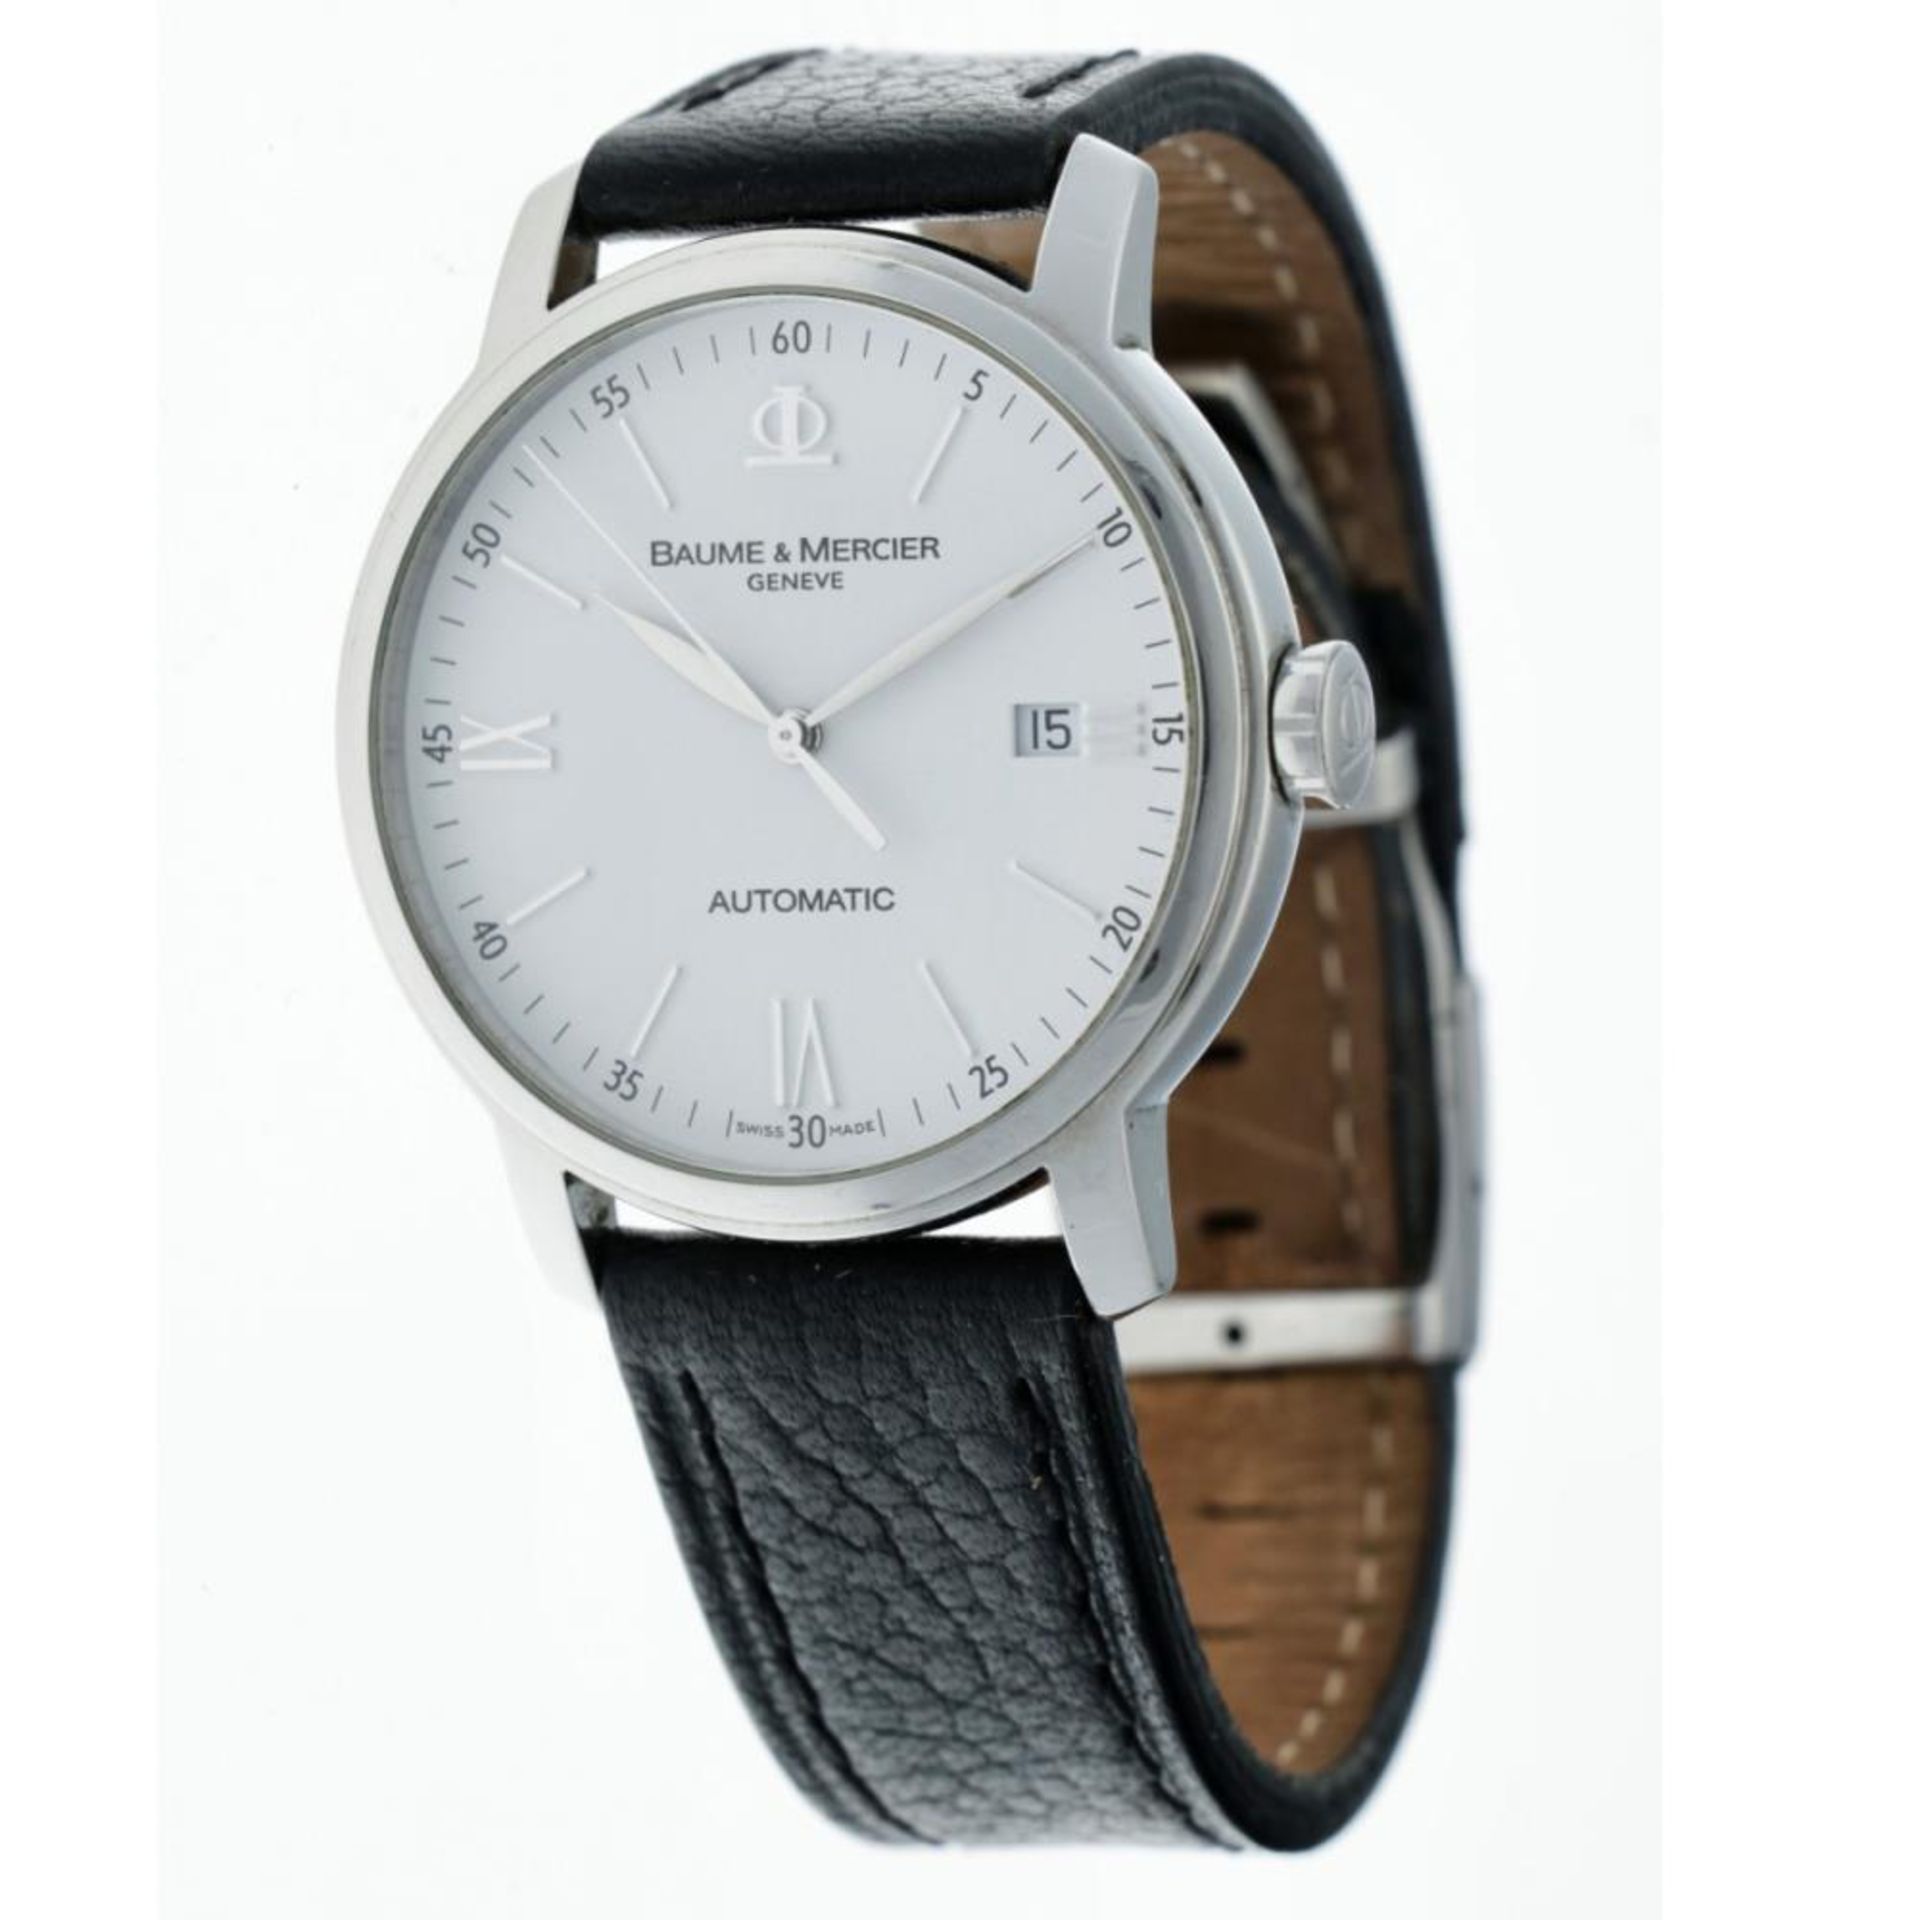 Baume & Mercier Classima 65554 - Men's watch - approx. 2010. - Image 3 of 10